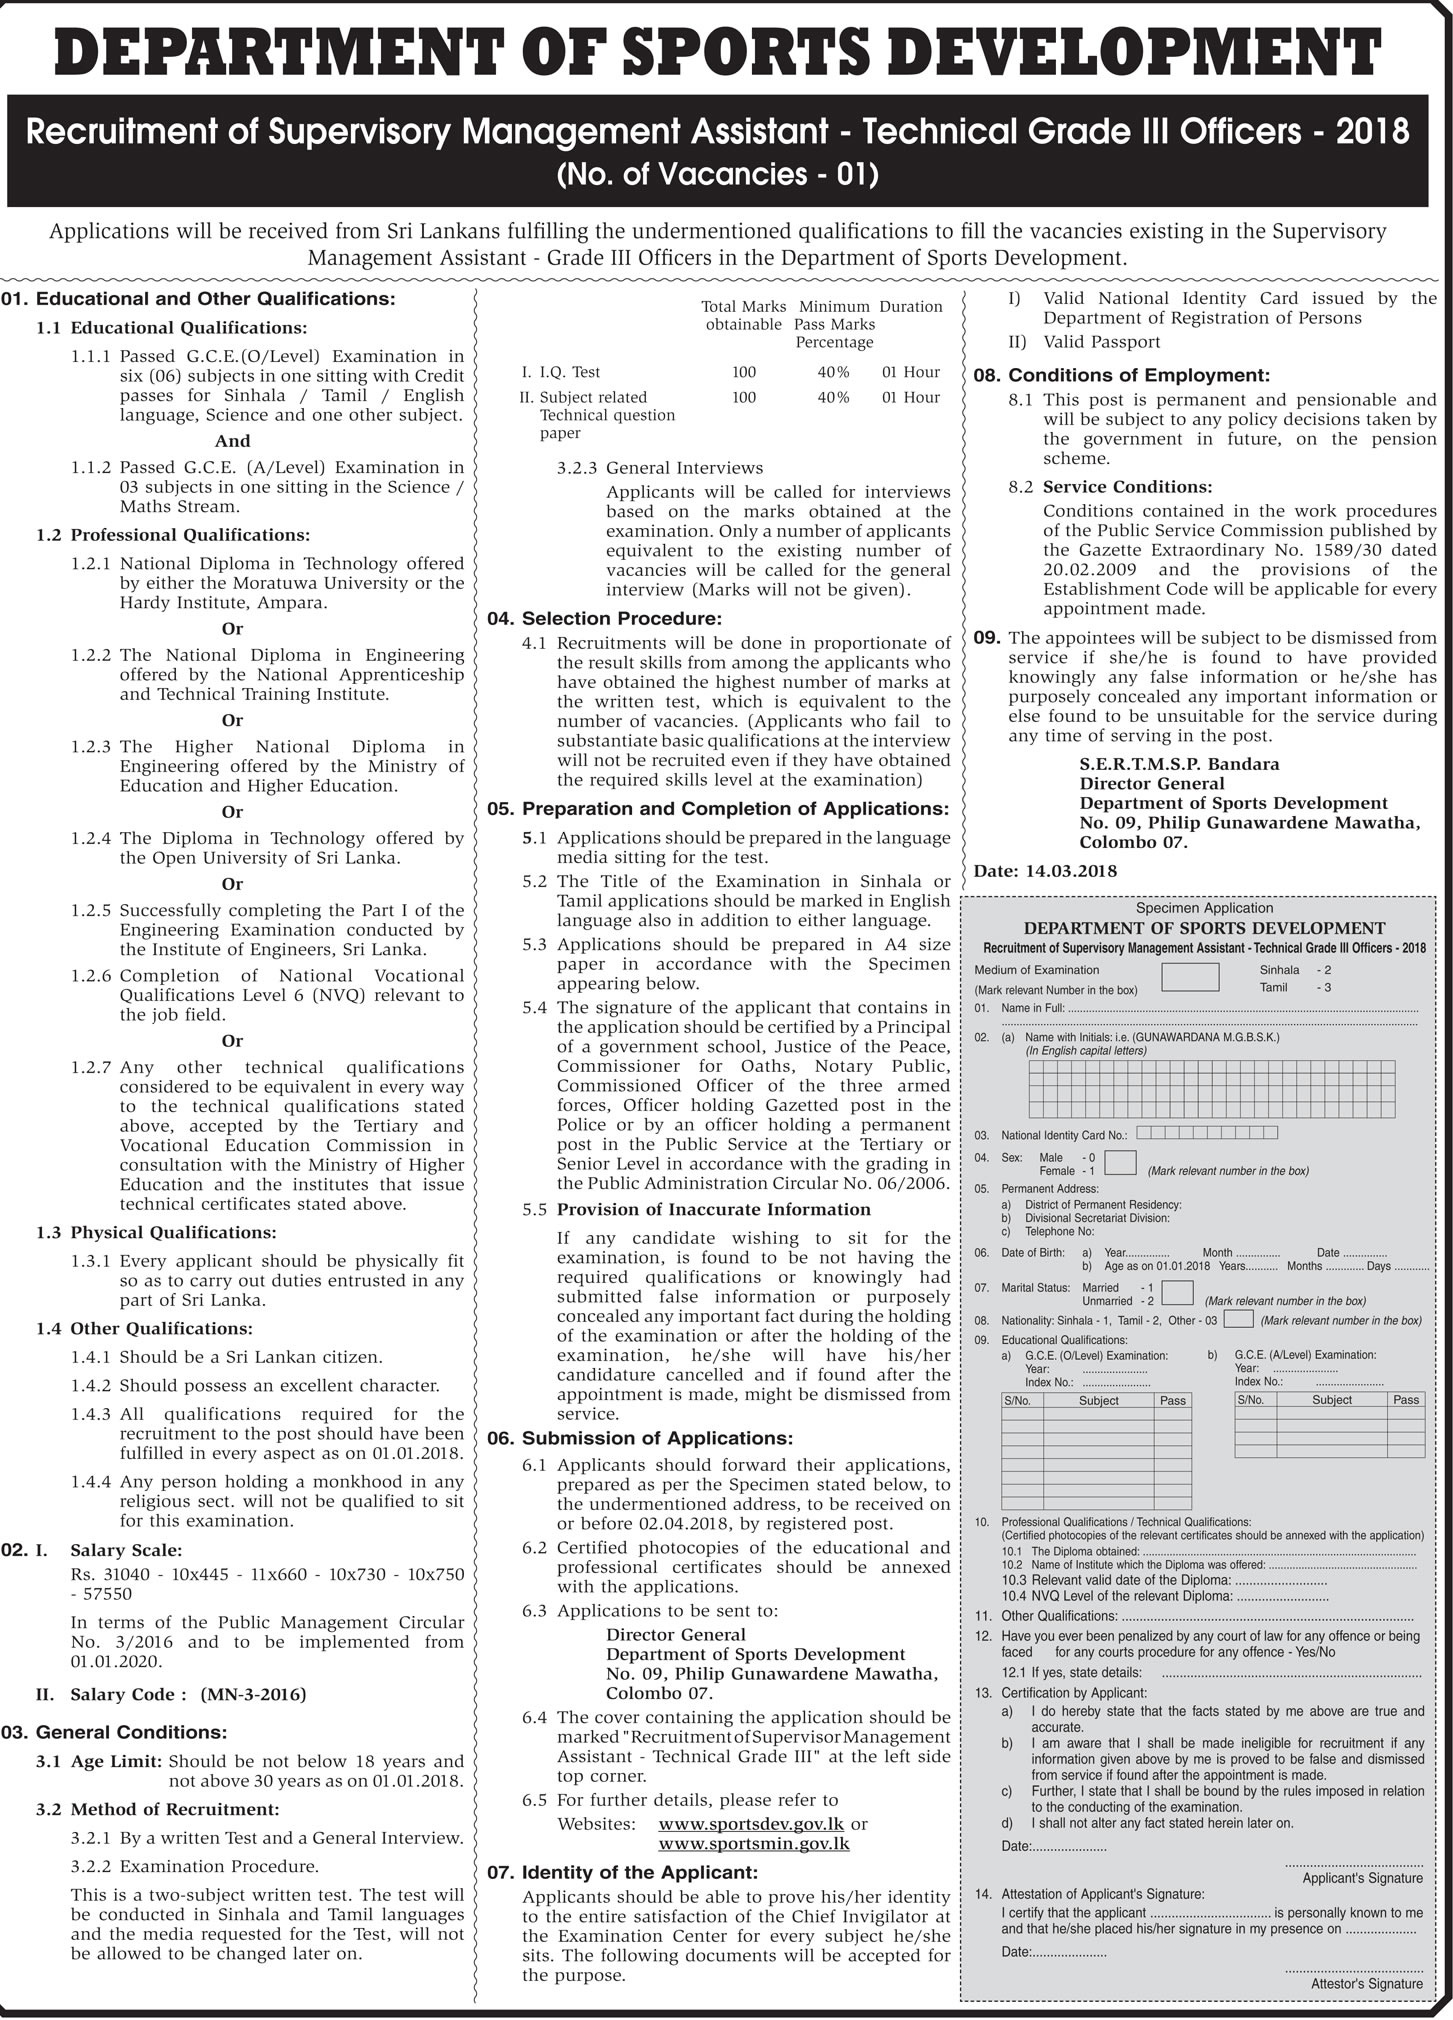 Department of Sports Development Supervisory Management Assistant (Technical) Jobs Vacancies Applications